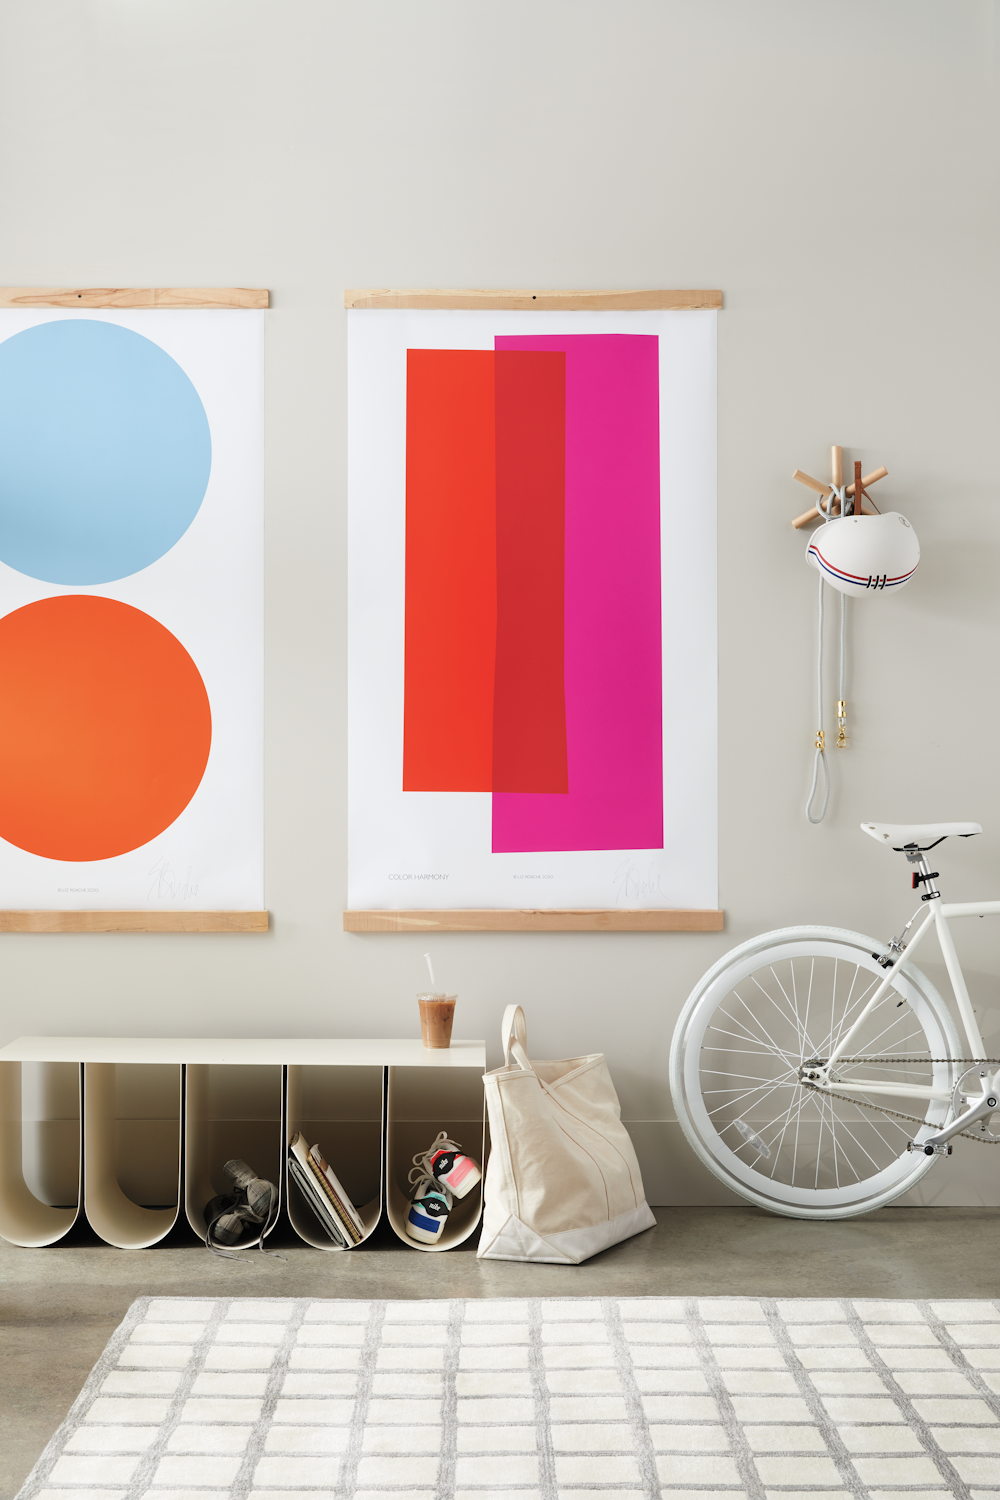 Liz Roache Art "Color Harmony" Print in a living room setting